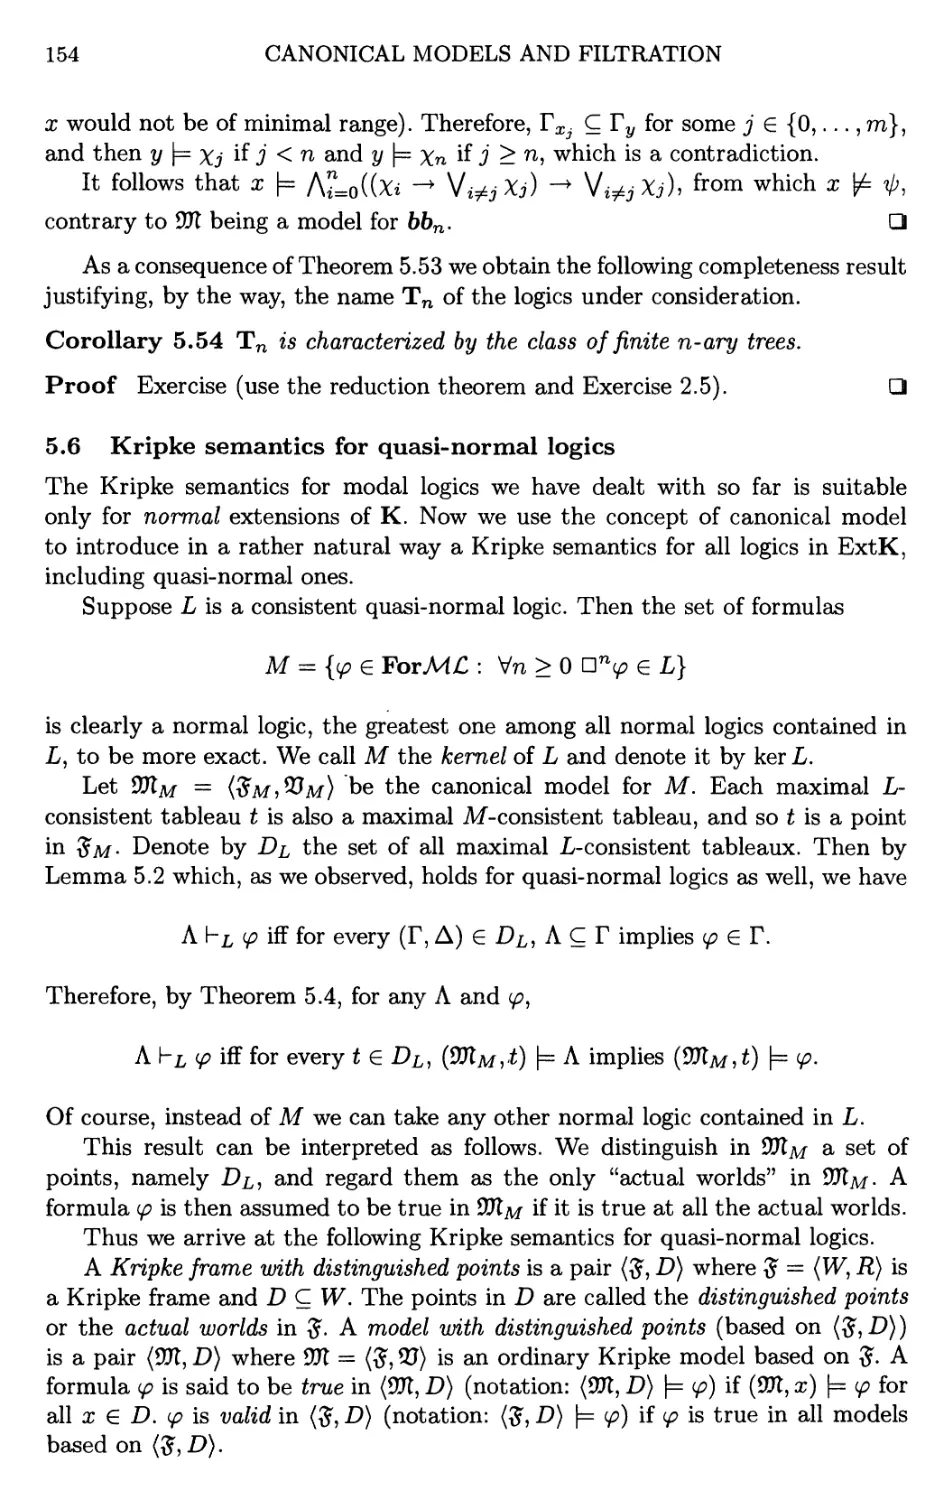 5.6 Kripke semantics for quasi-normal logics